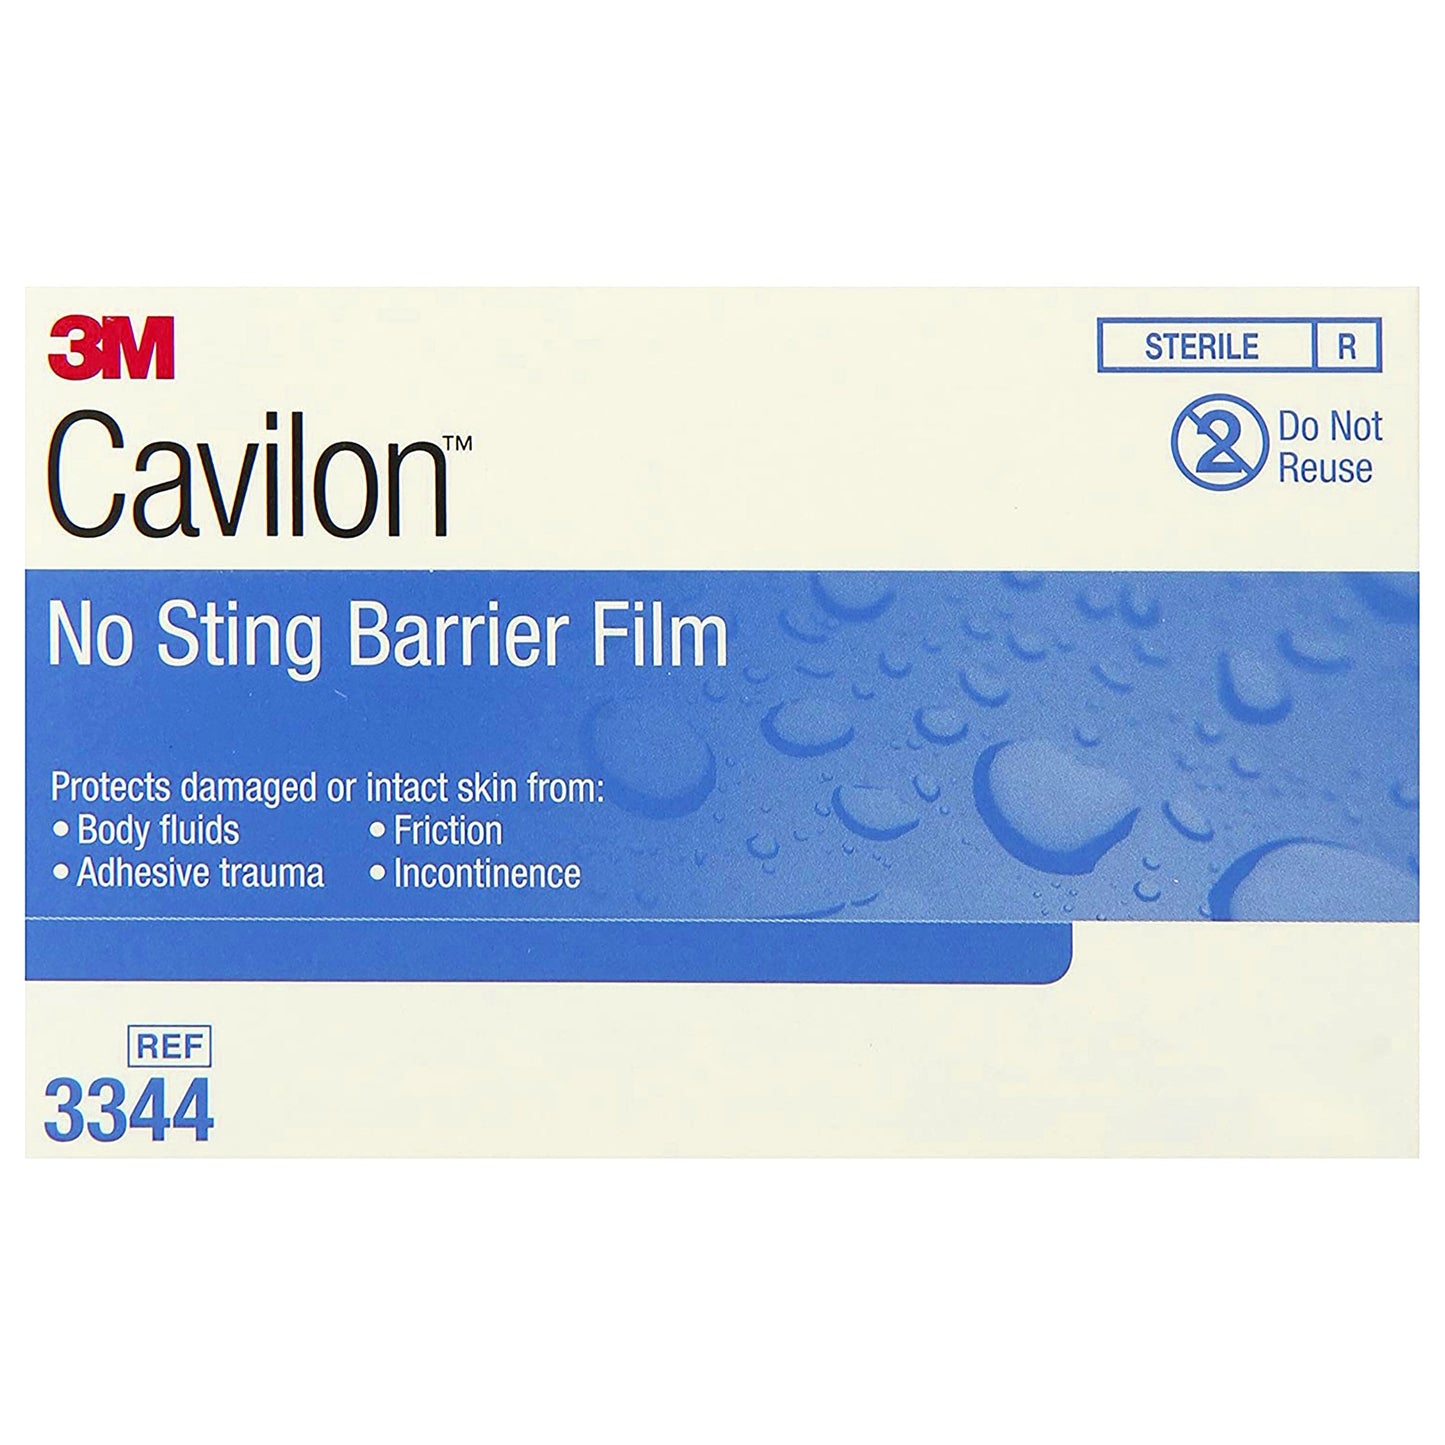 3M Cavilon Barrier Film Wipes, No Sting, Sterile